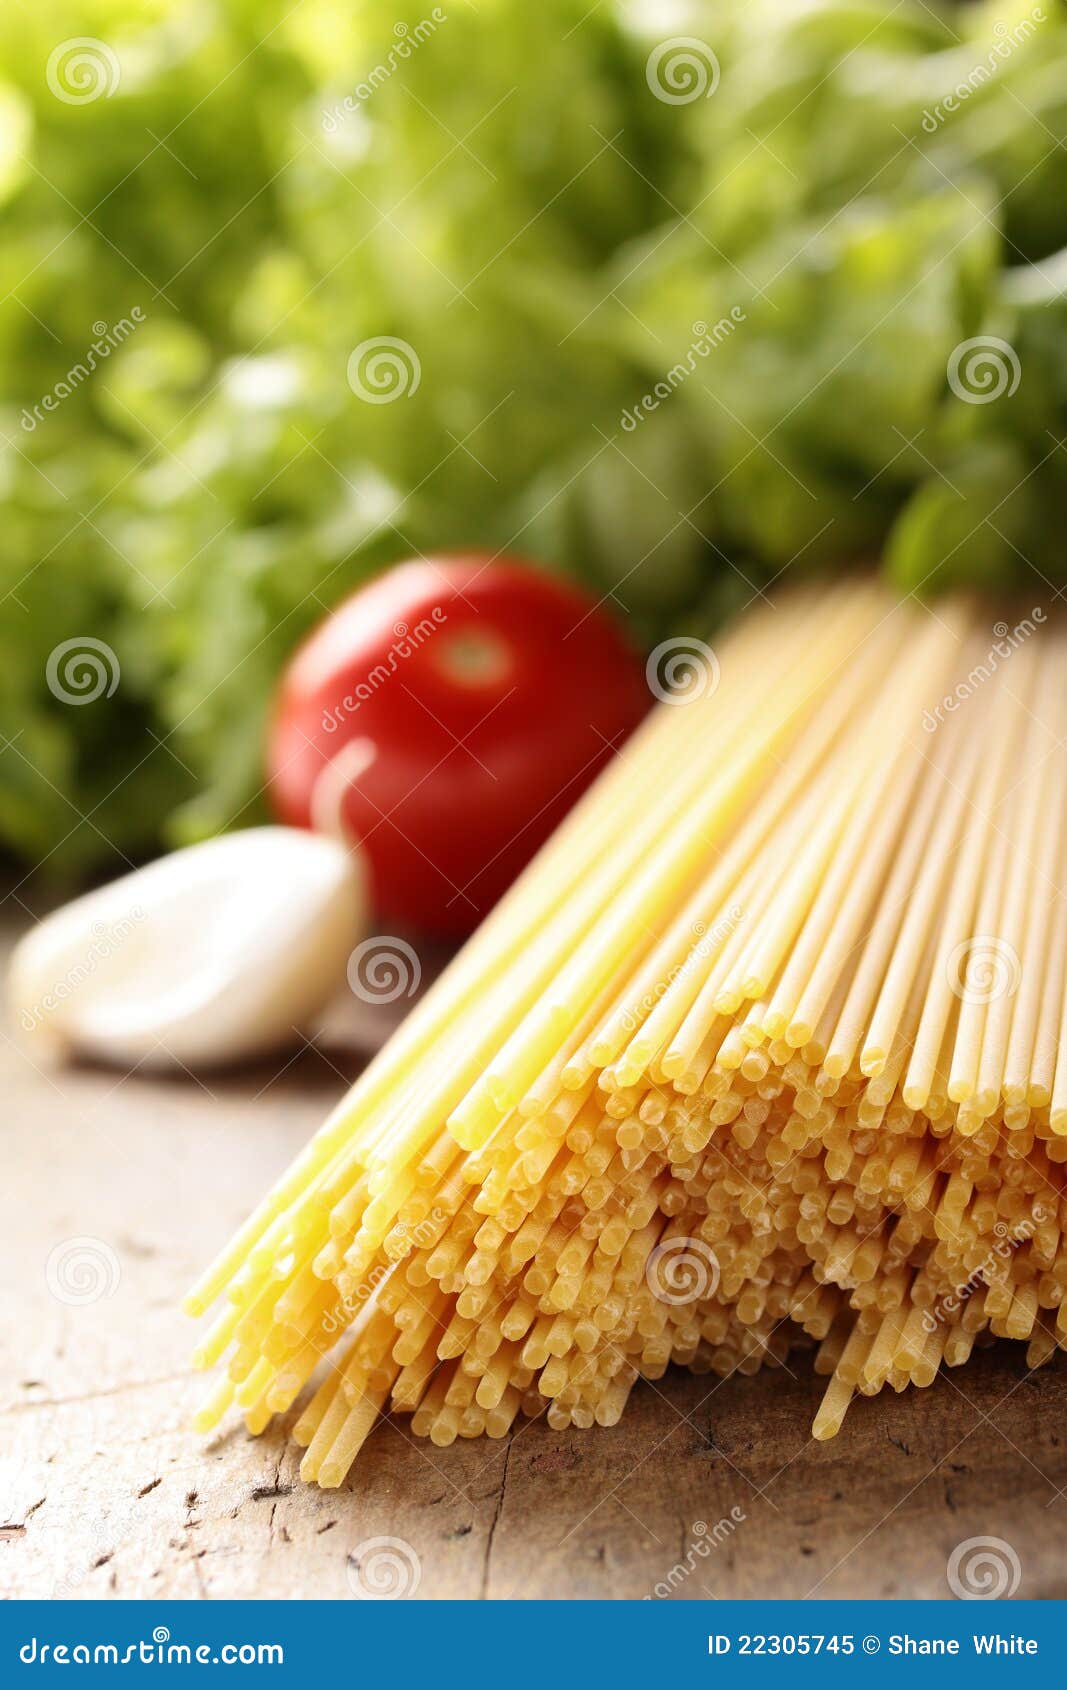 Spaghetti stock image. Image of organic, health, cherry - 22305745